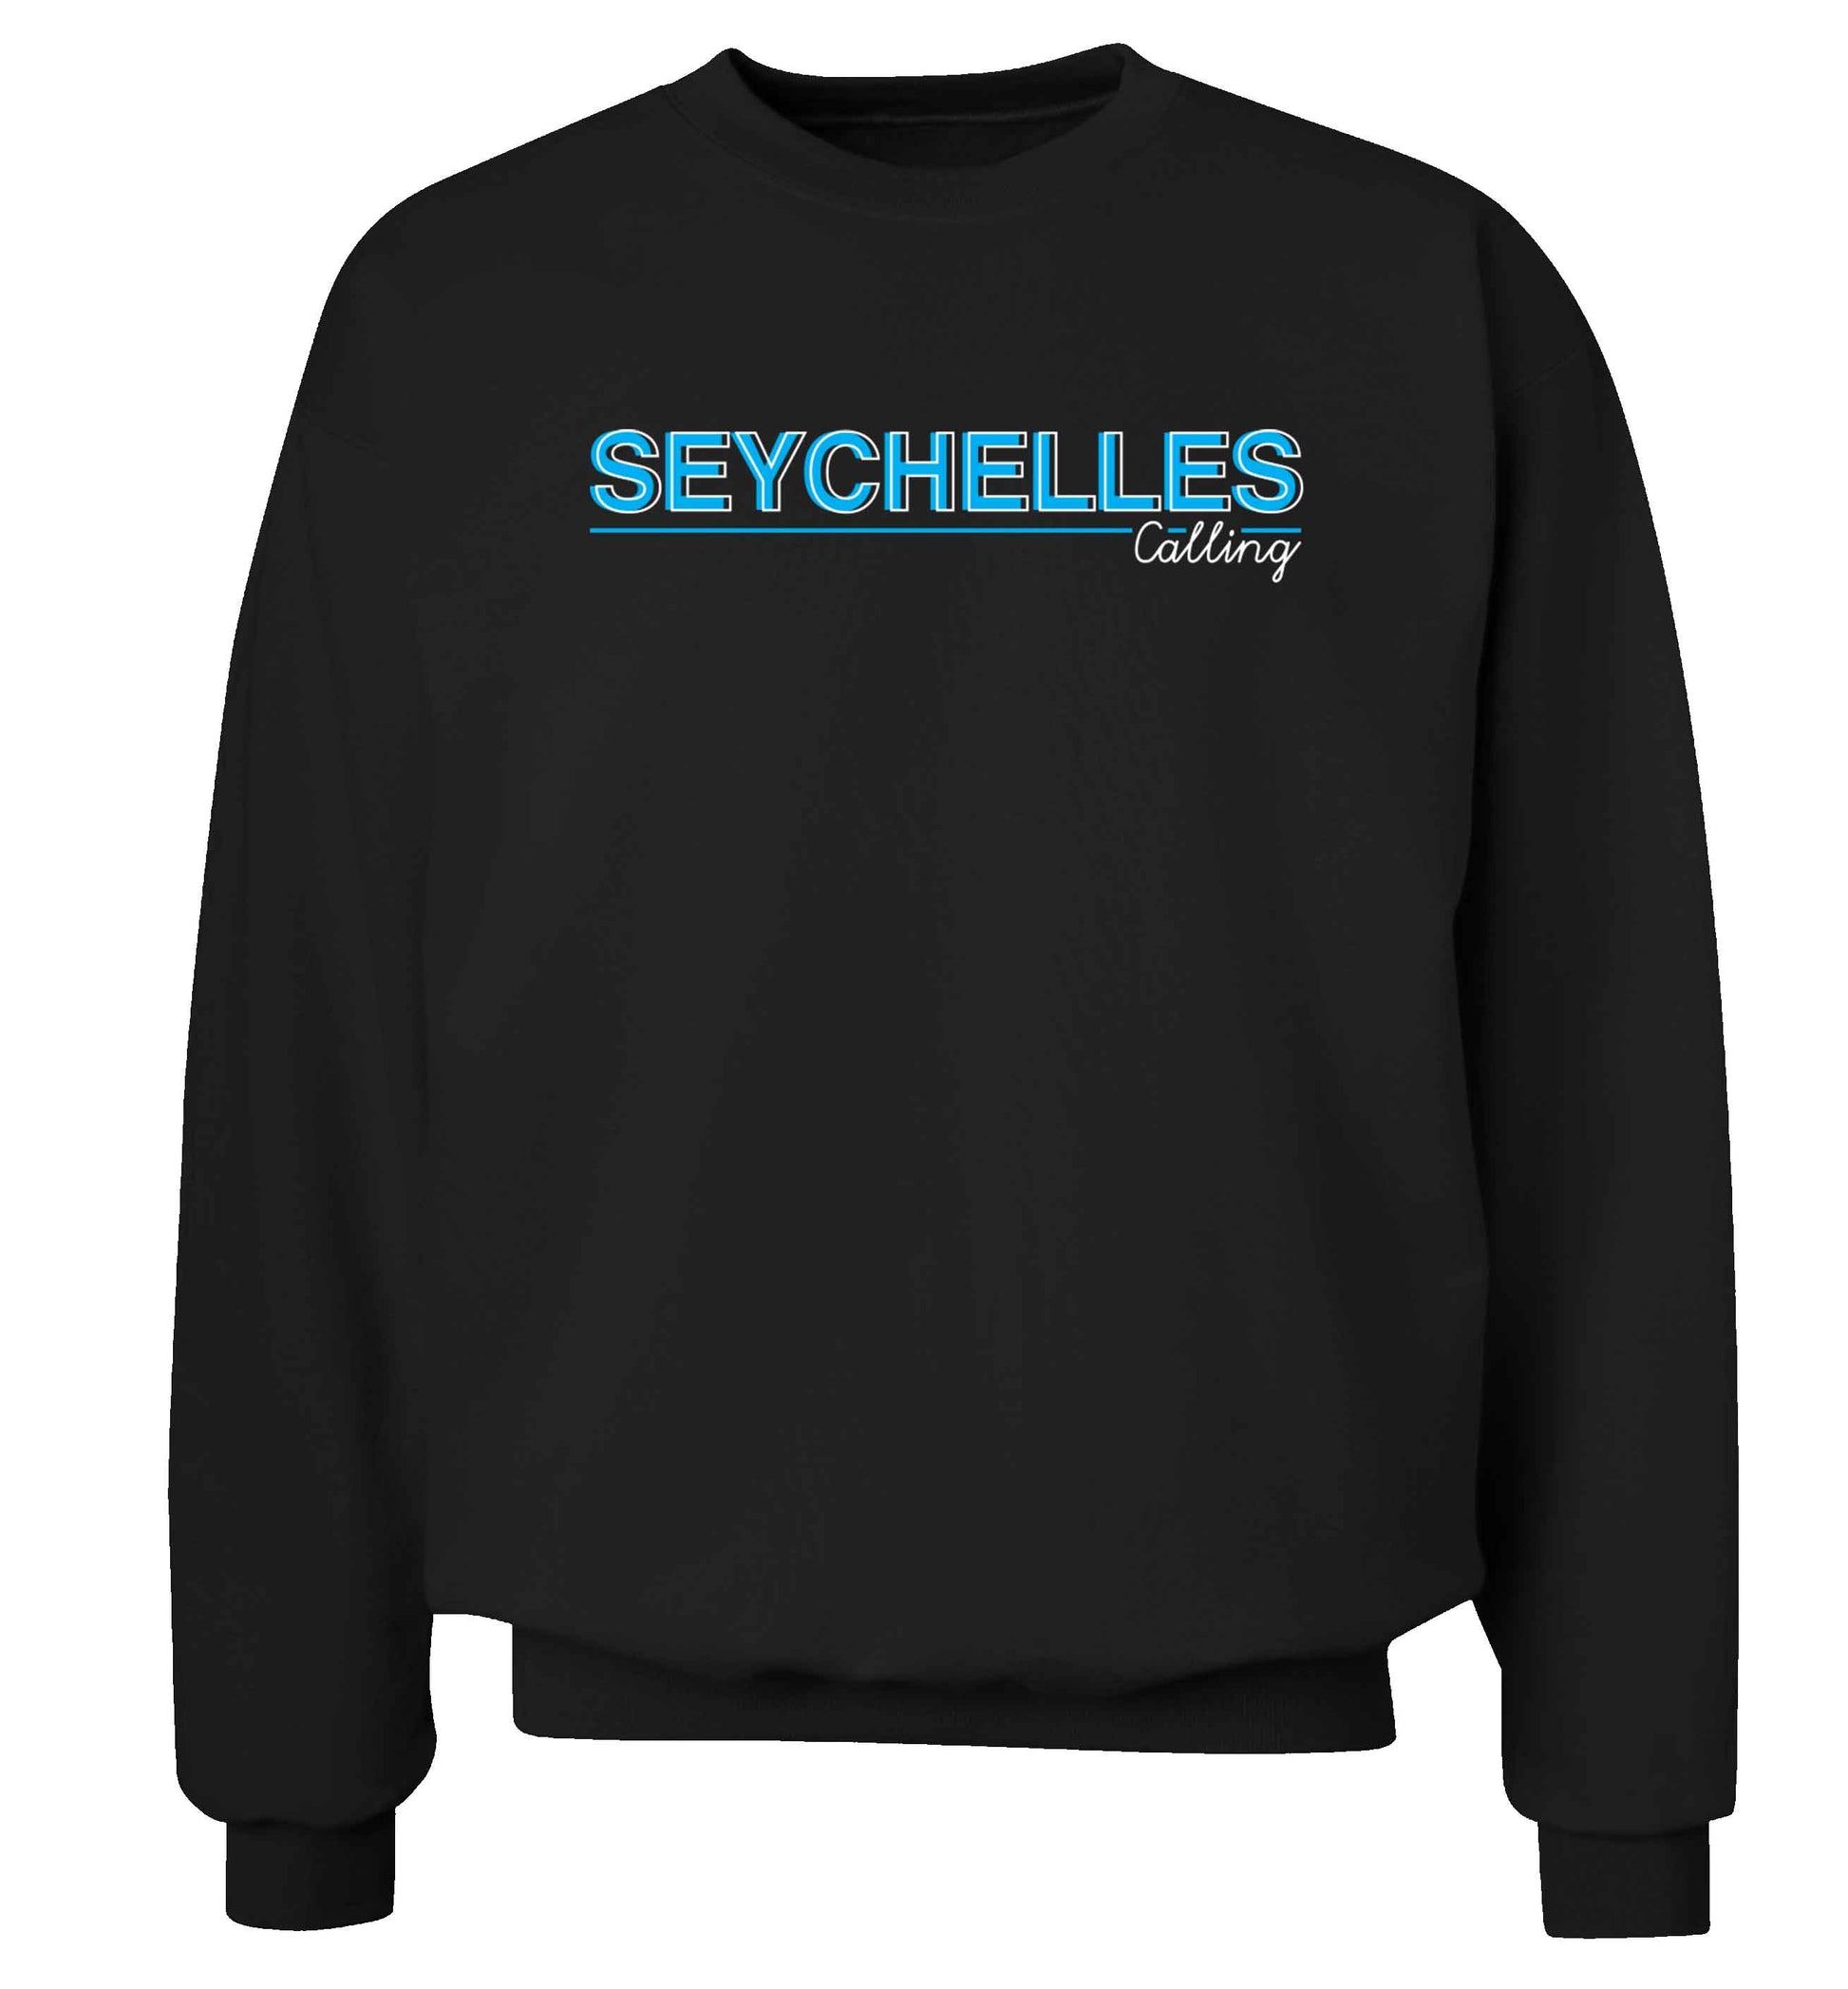 Seychelles calling Adult's unisex black Sweater 2XL